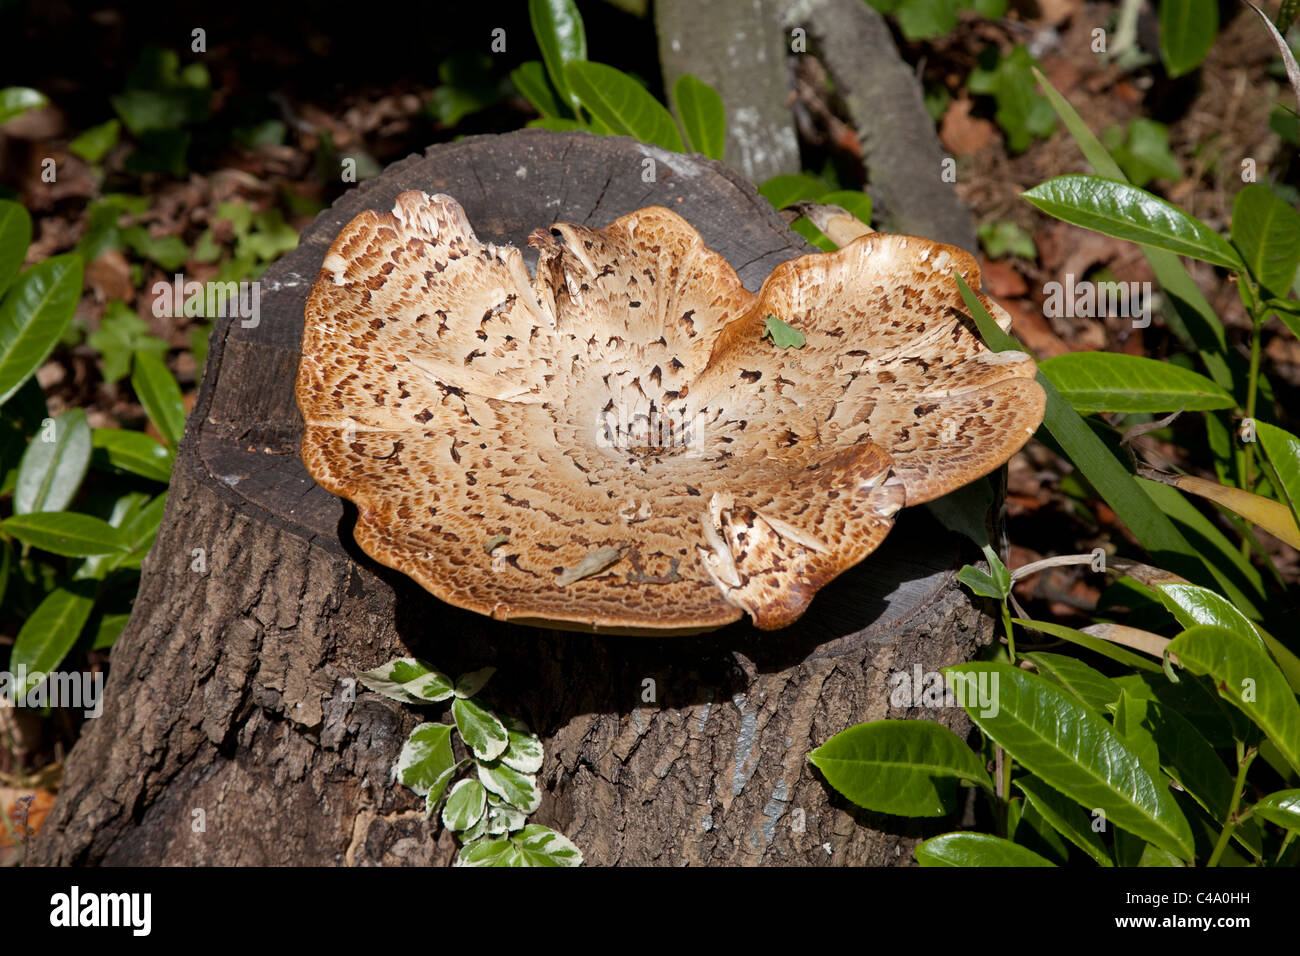 Tree stump fungi fungus mushroom Stock Photo